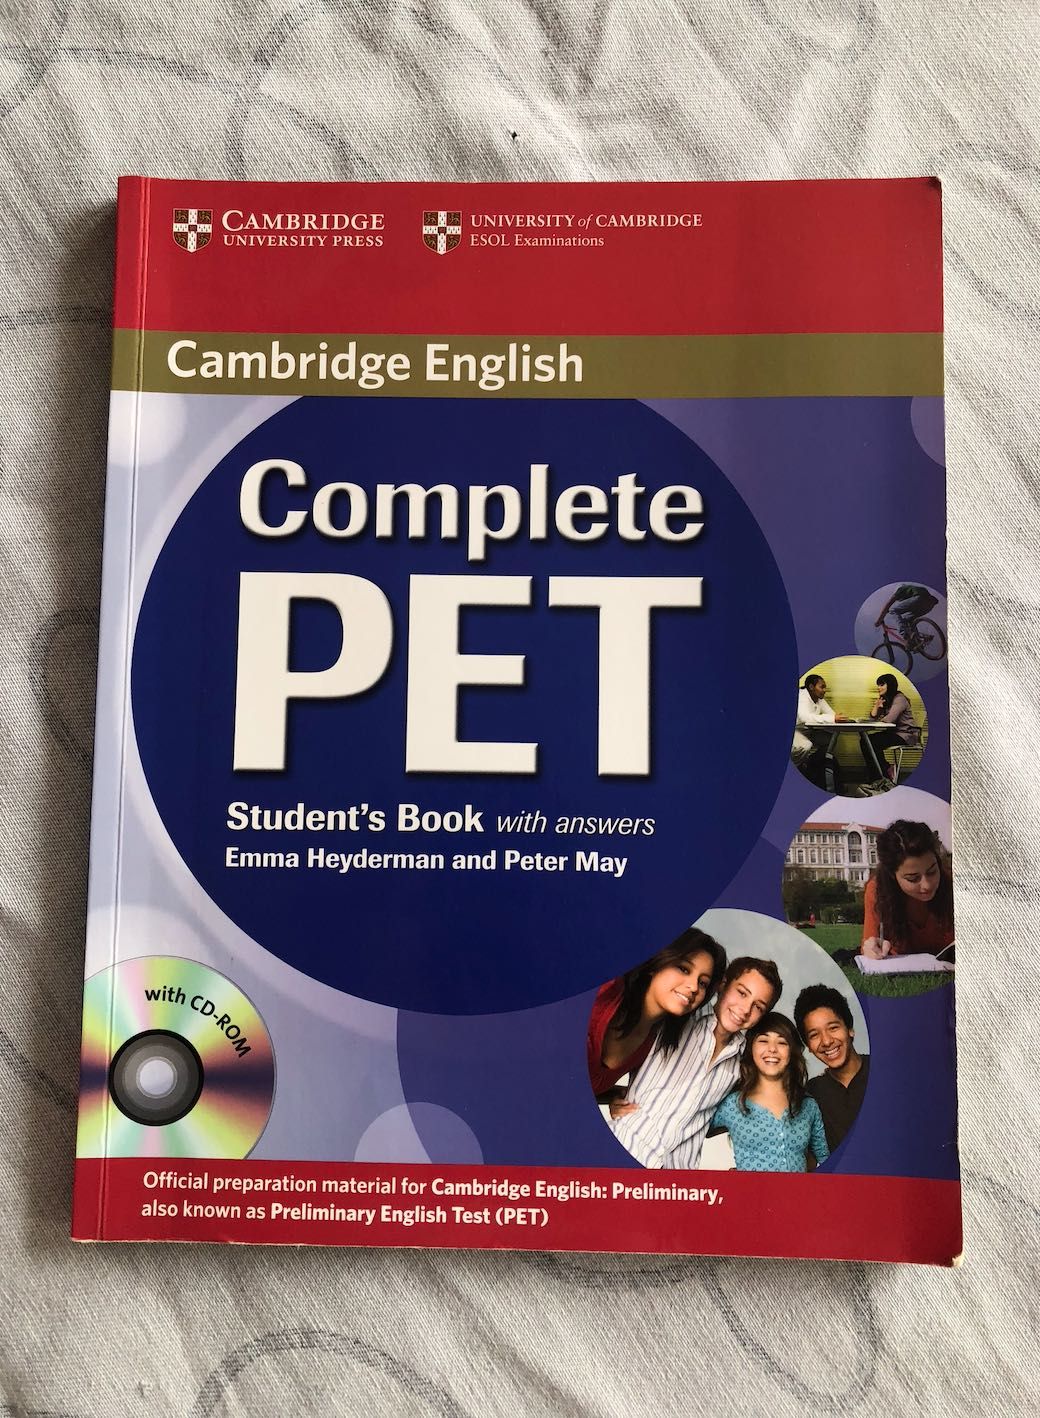 Cambridge English PET student's book